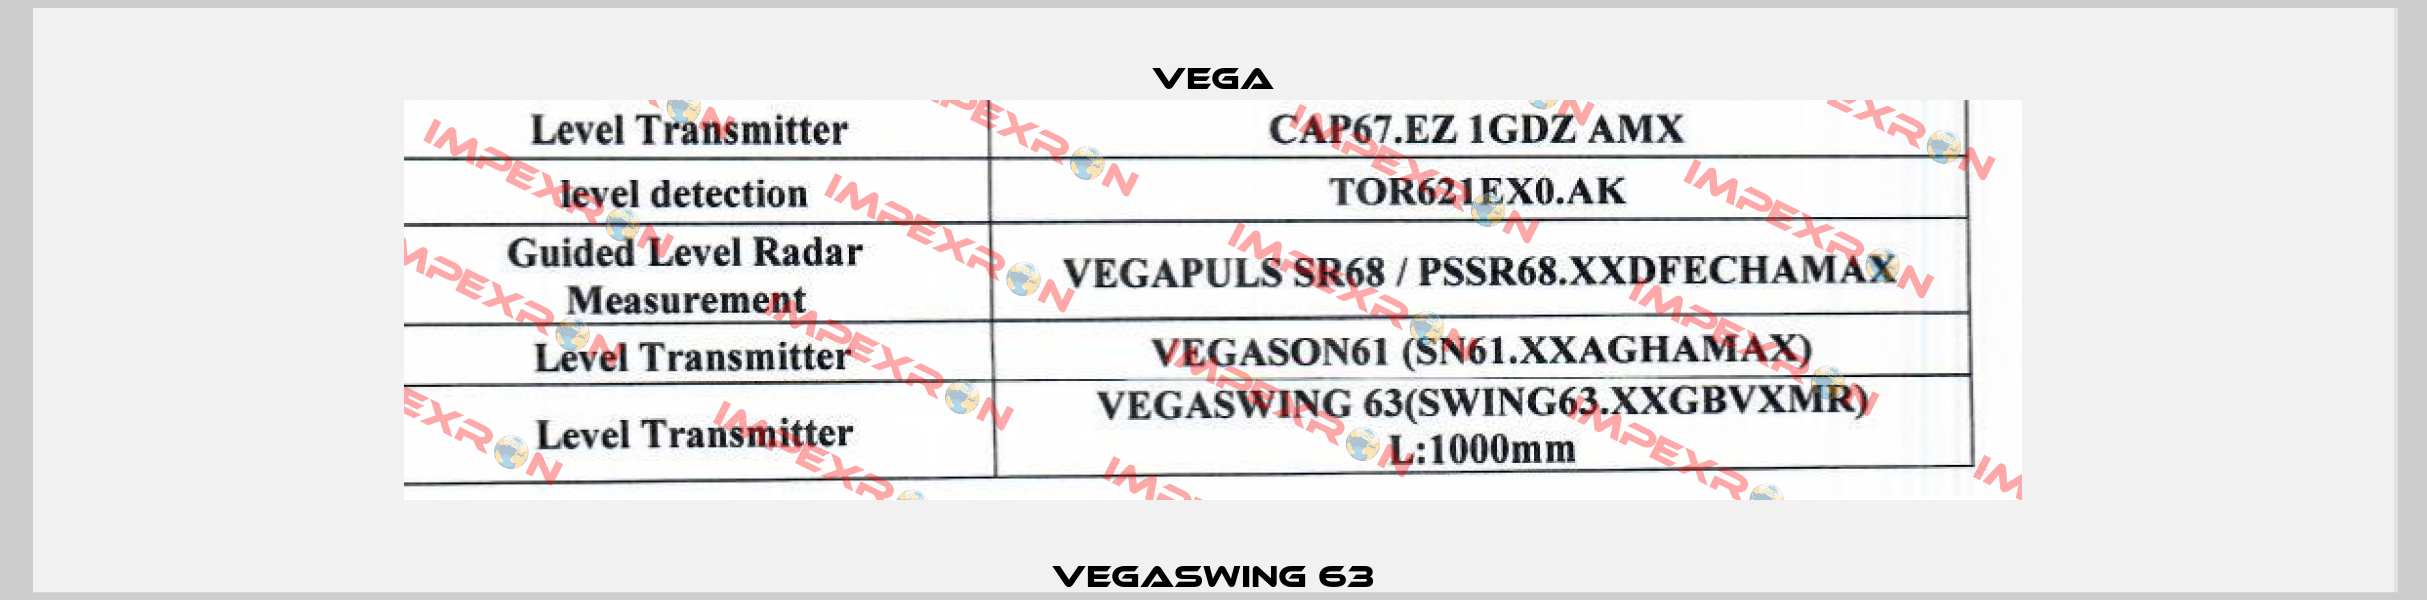 VEGASWING 63 Vega